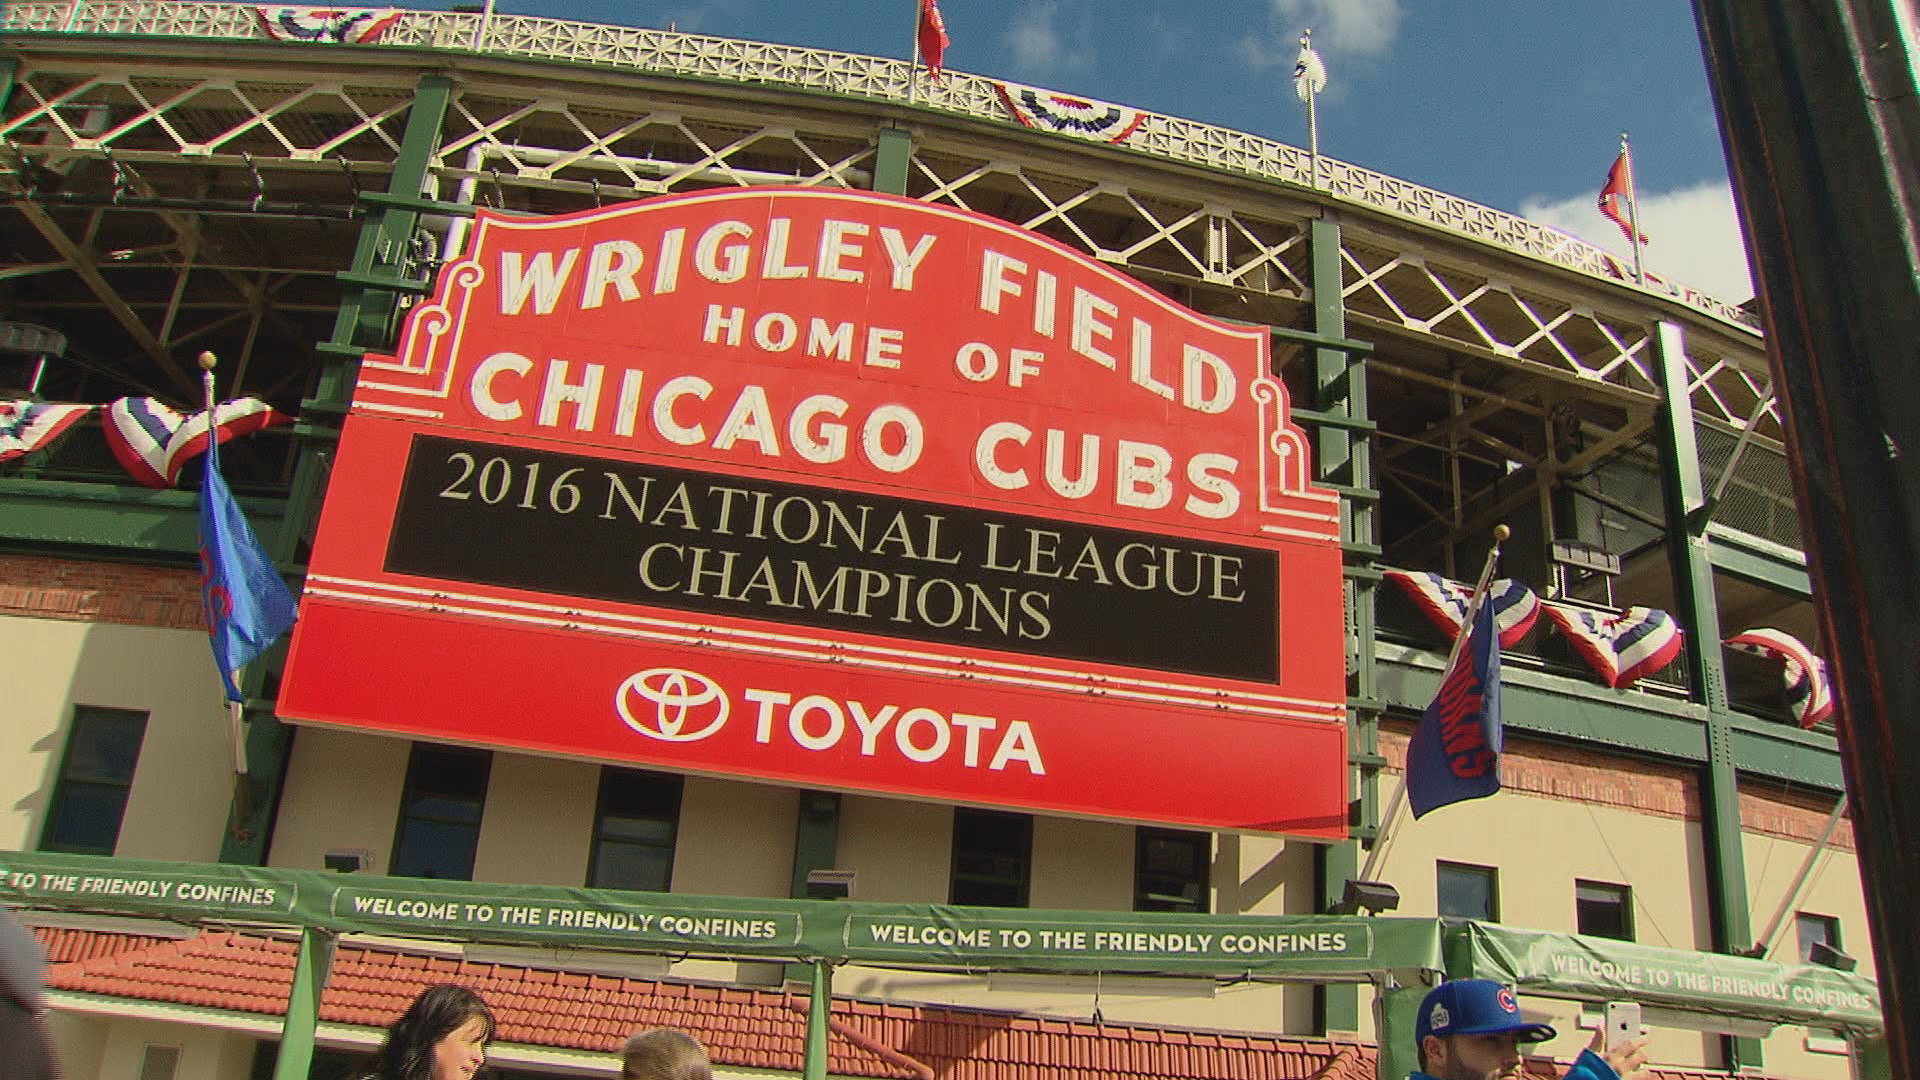 Chicago Cubs Hd Wallpapers - Wrigley Field - HD Wallpaper 